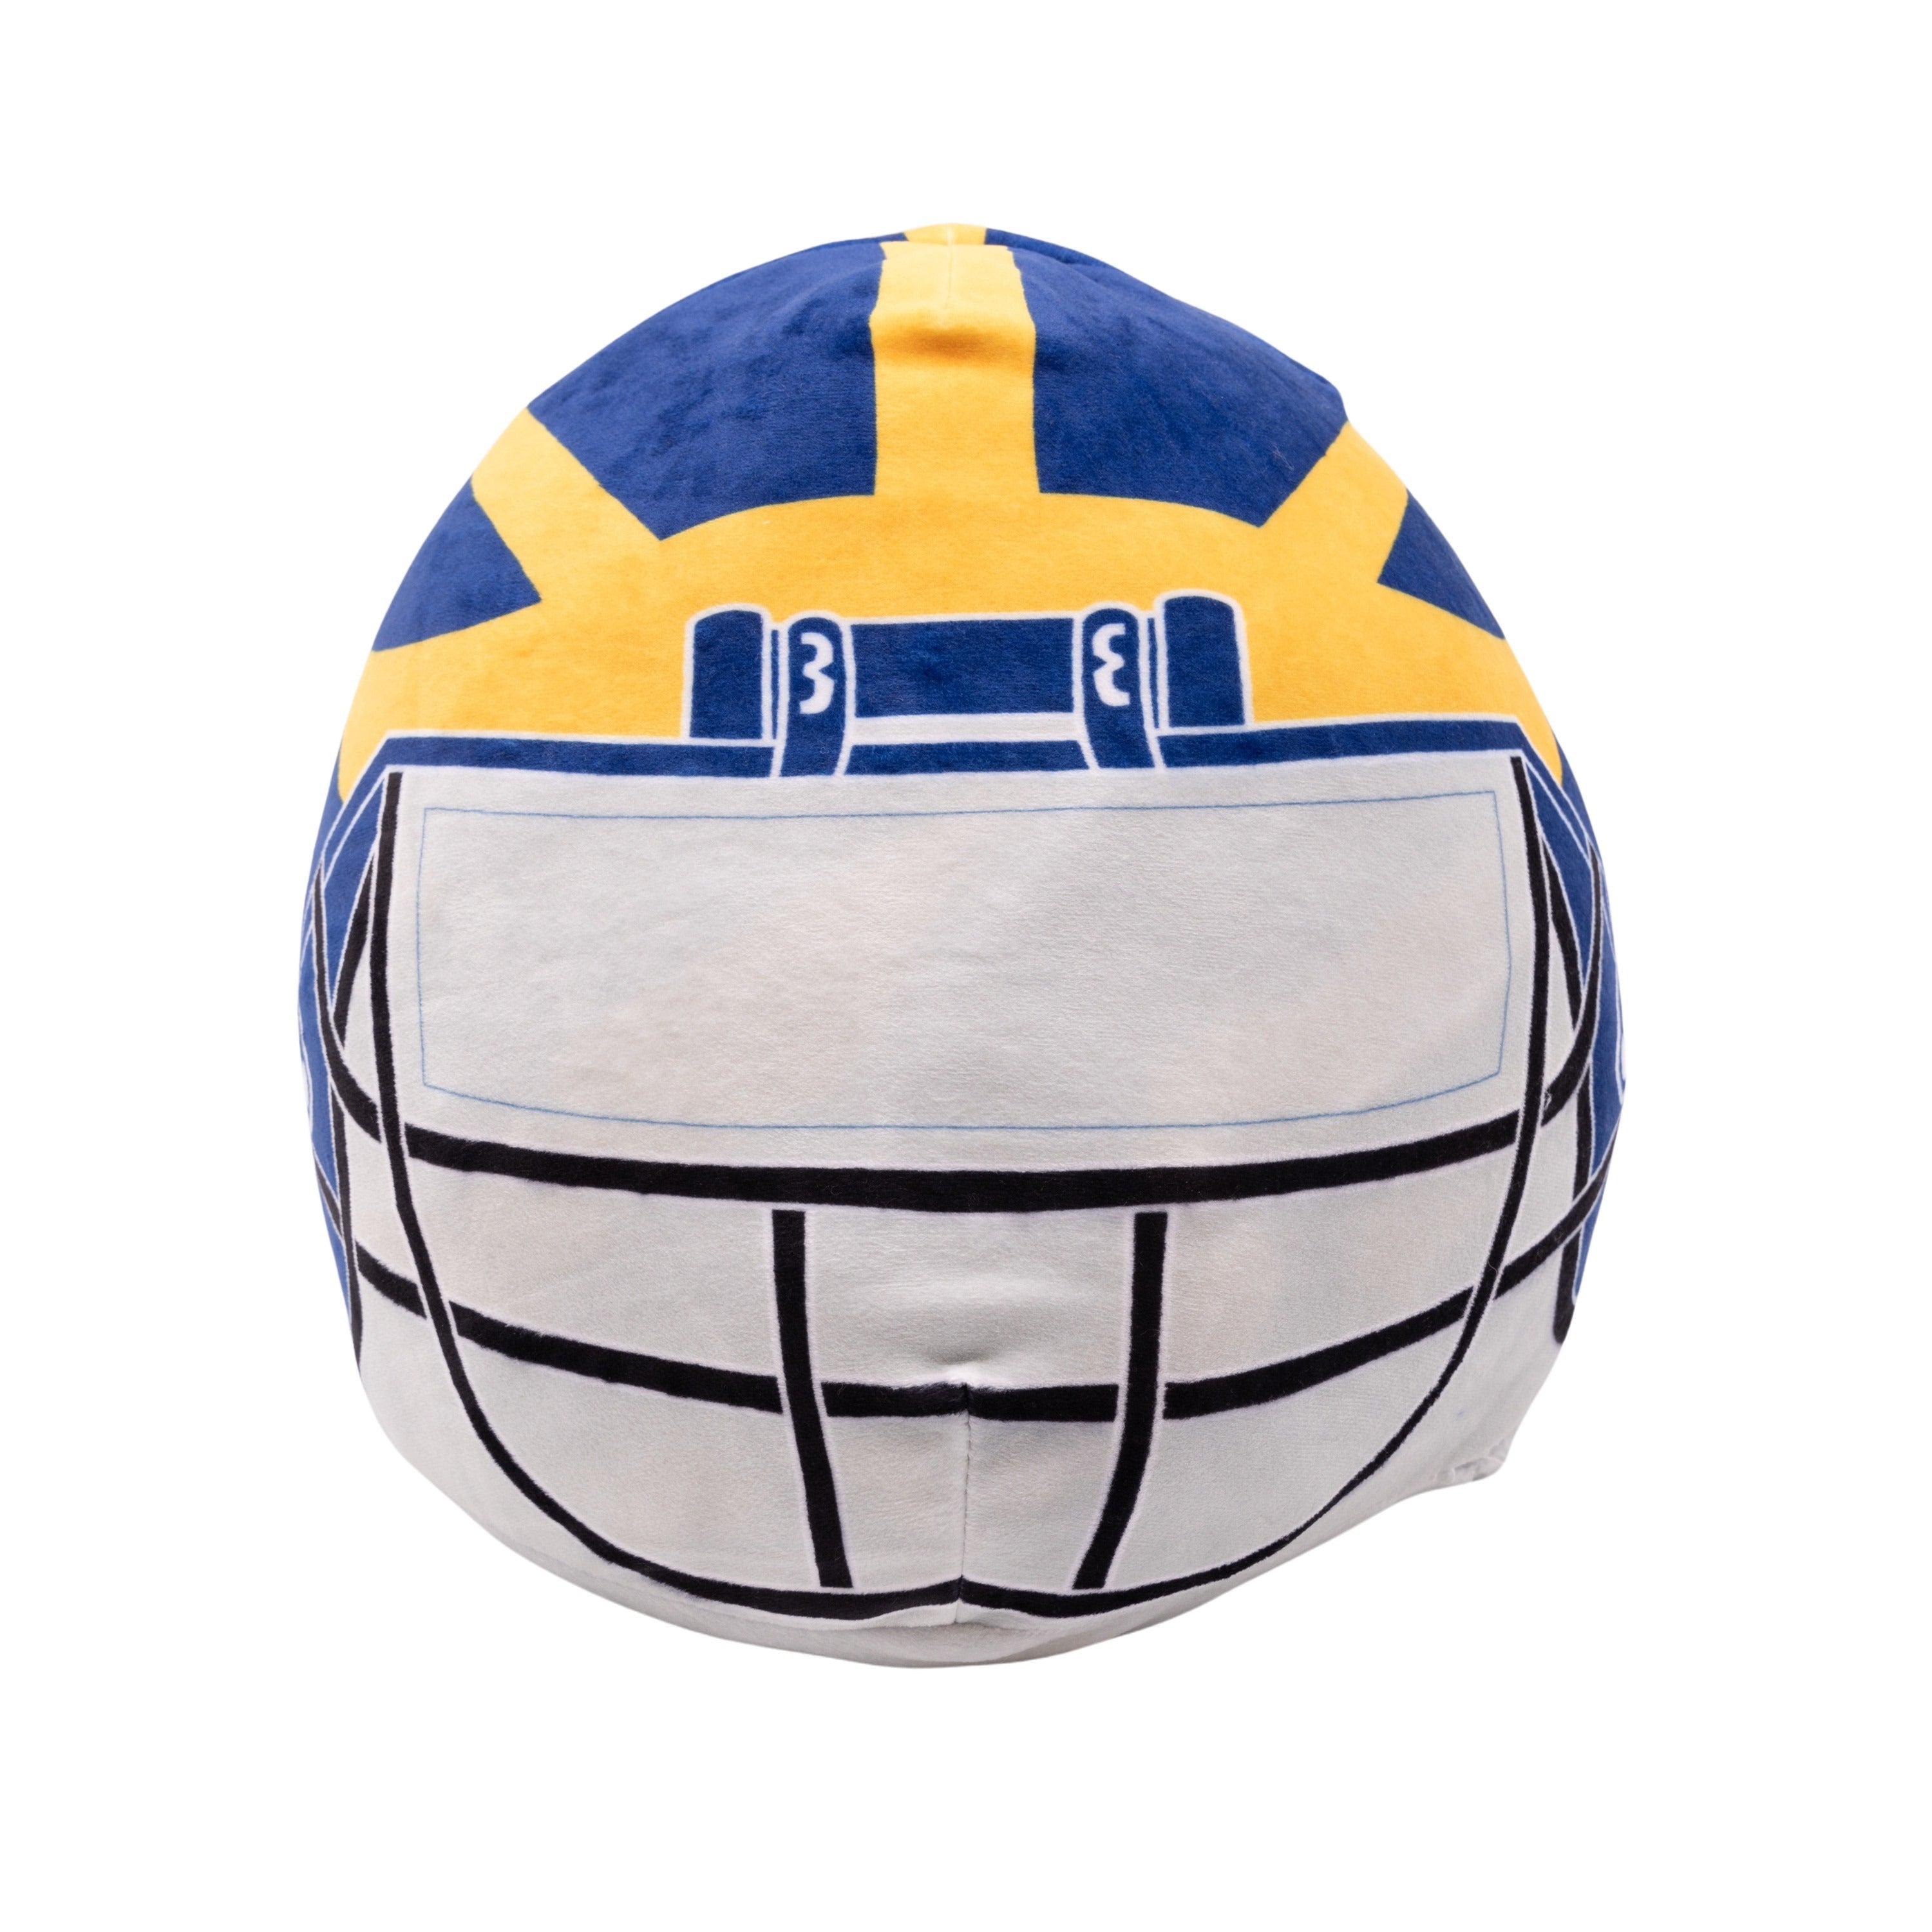 University of Michigan Helmet Snugible 2-in-1 Blanket Hoodie & Pillow